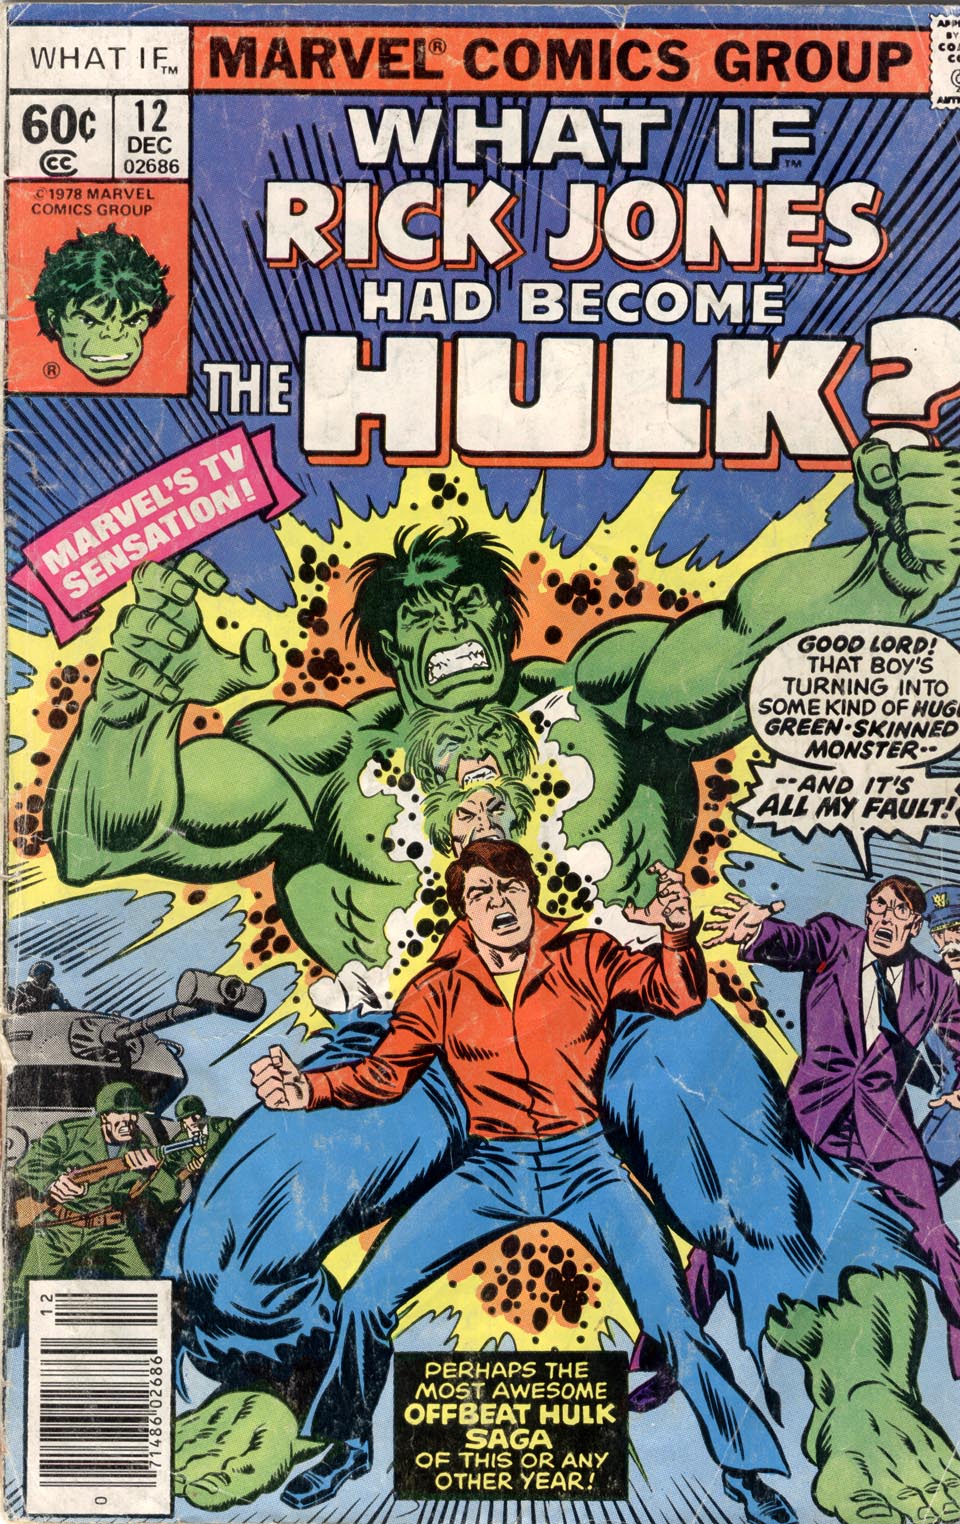 Rick Jones had become the Hulk